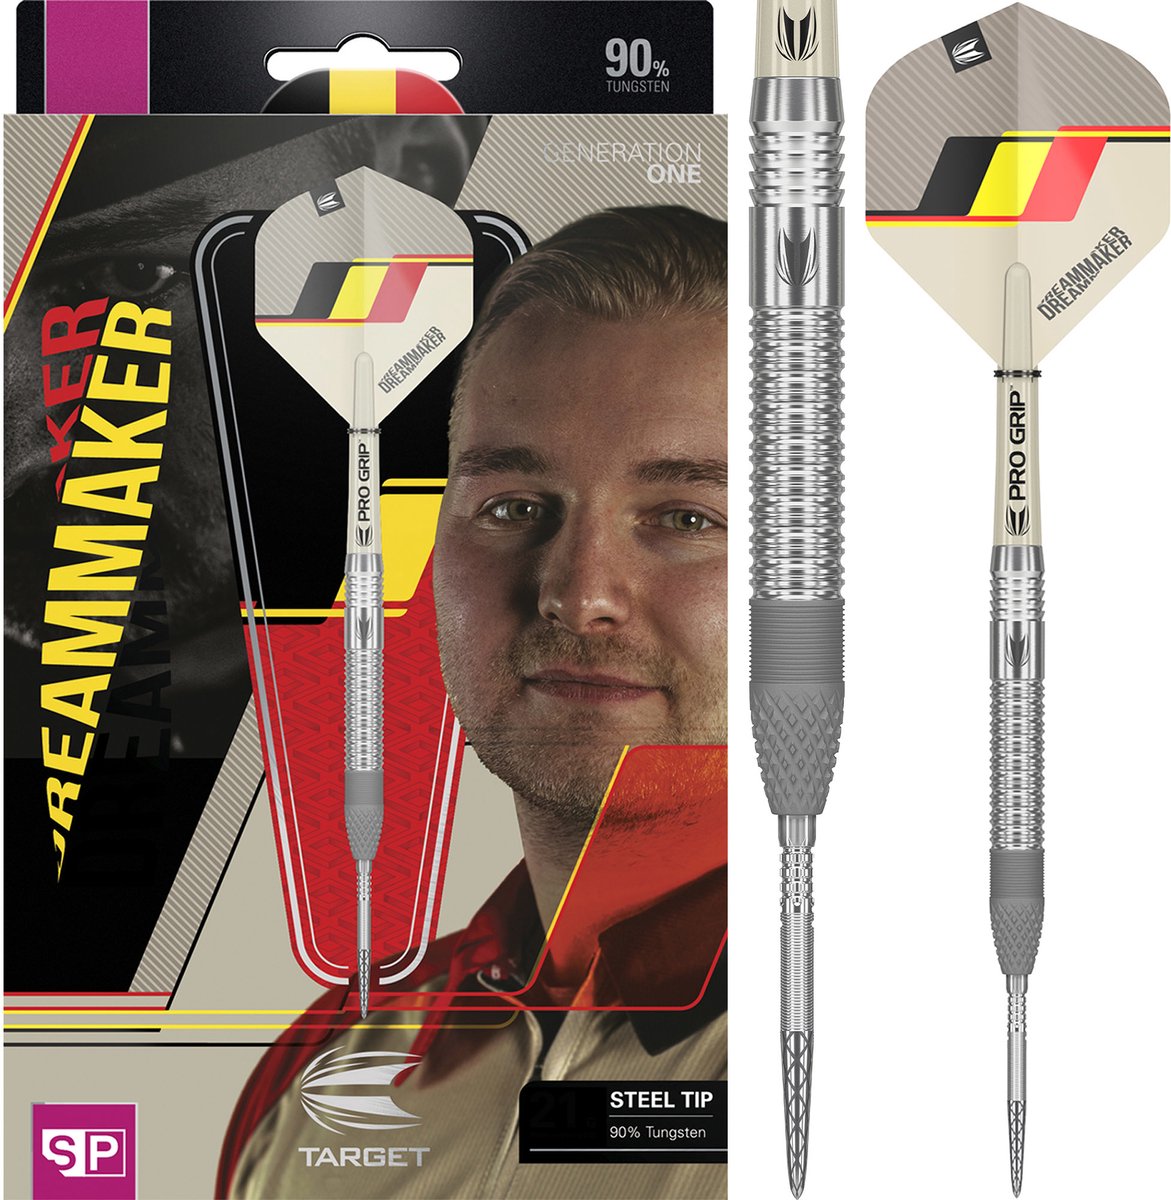 Target Dimitri Van den Bergh G1 90% Swiss dartpijlen - 25 gram